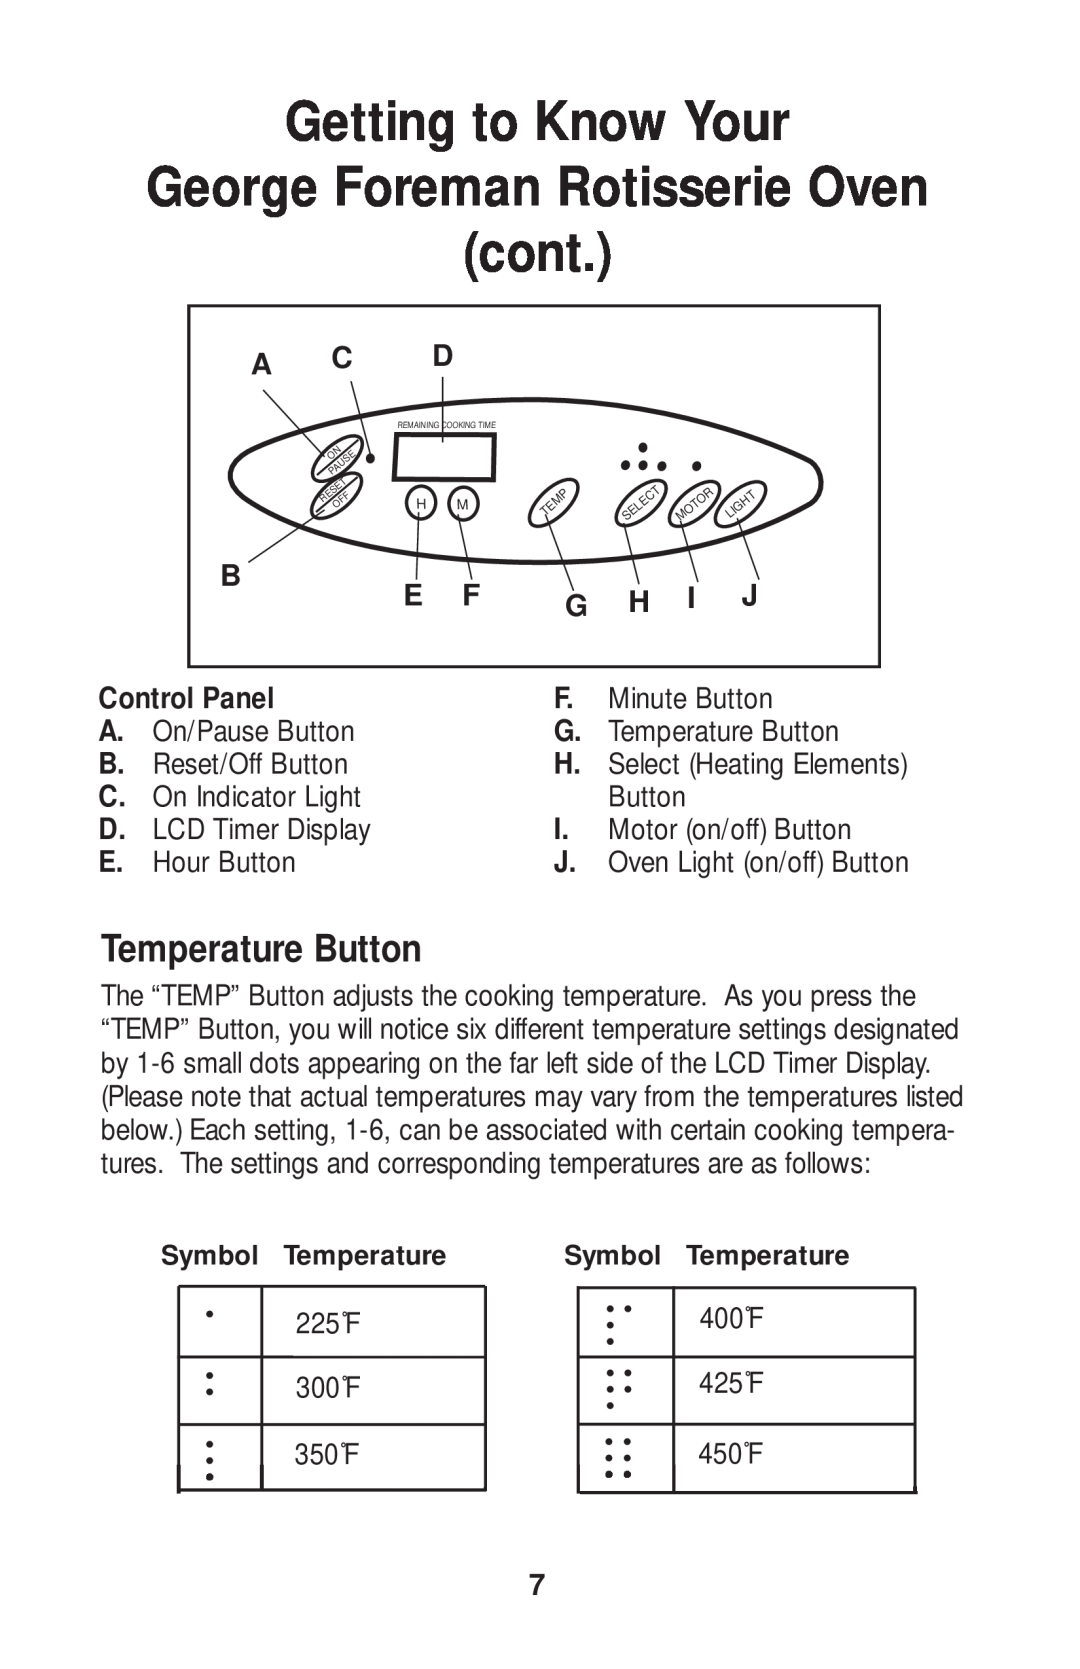 Salton GR80B owner manual George Foreman Rotisserie Oven cont, Temperature Button, A C D, B E F Control Panel, G Hi J 